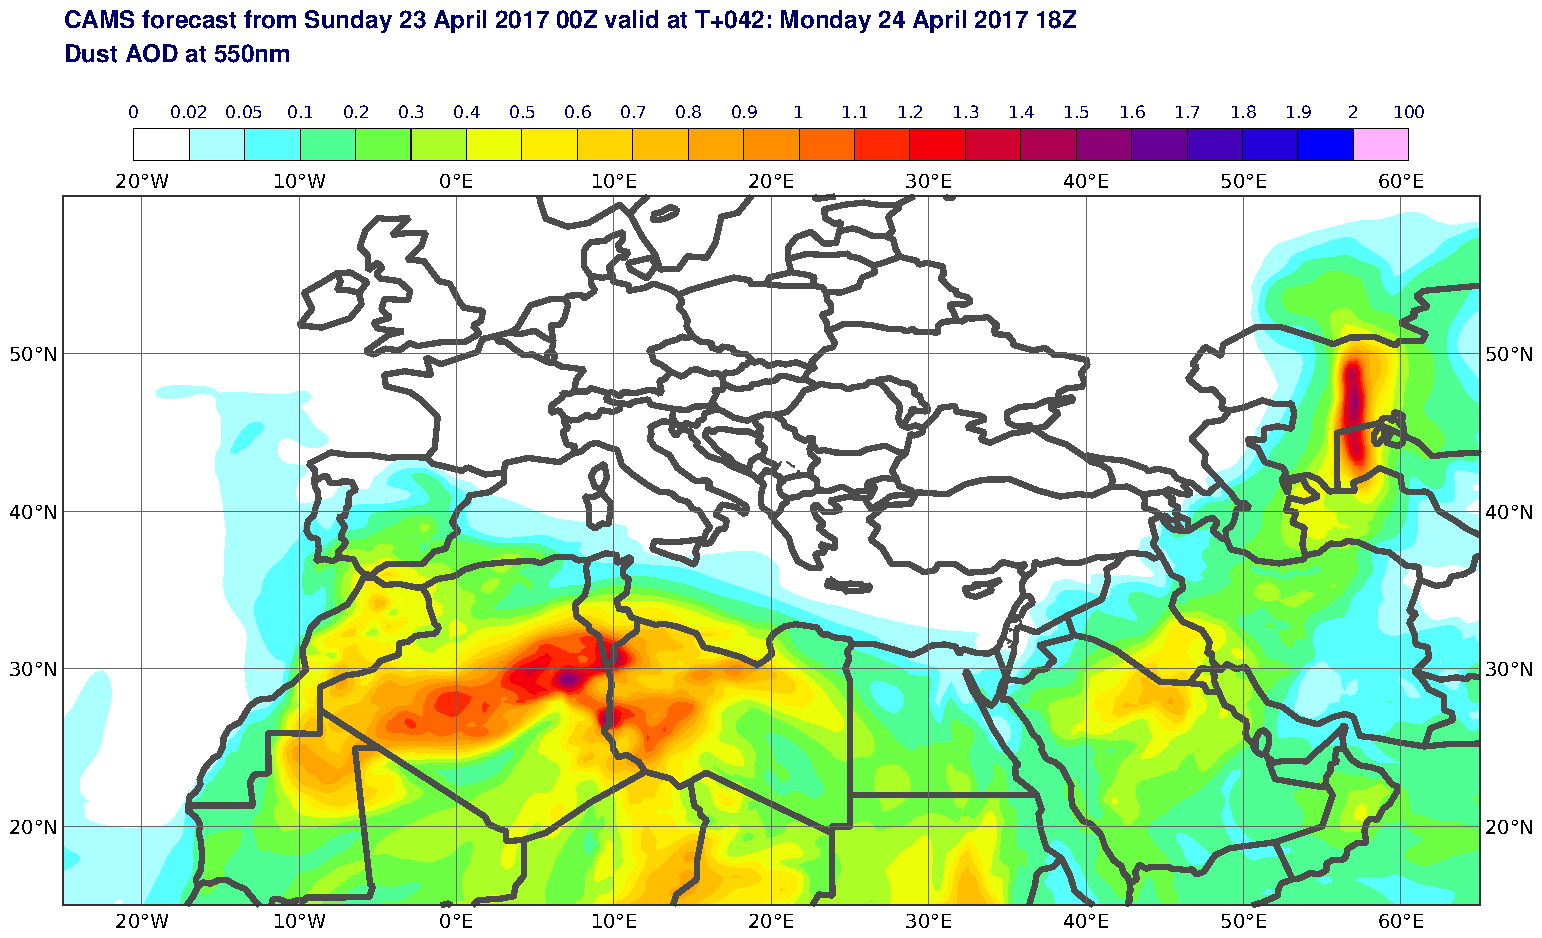 Dust AOD at 550nm valid at T42 - 2017-04-24 18:00